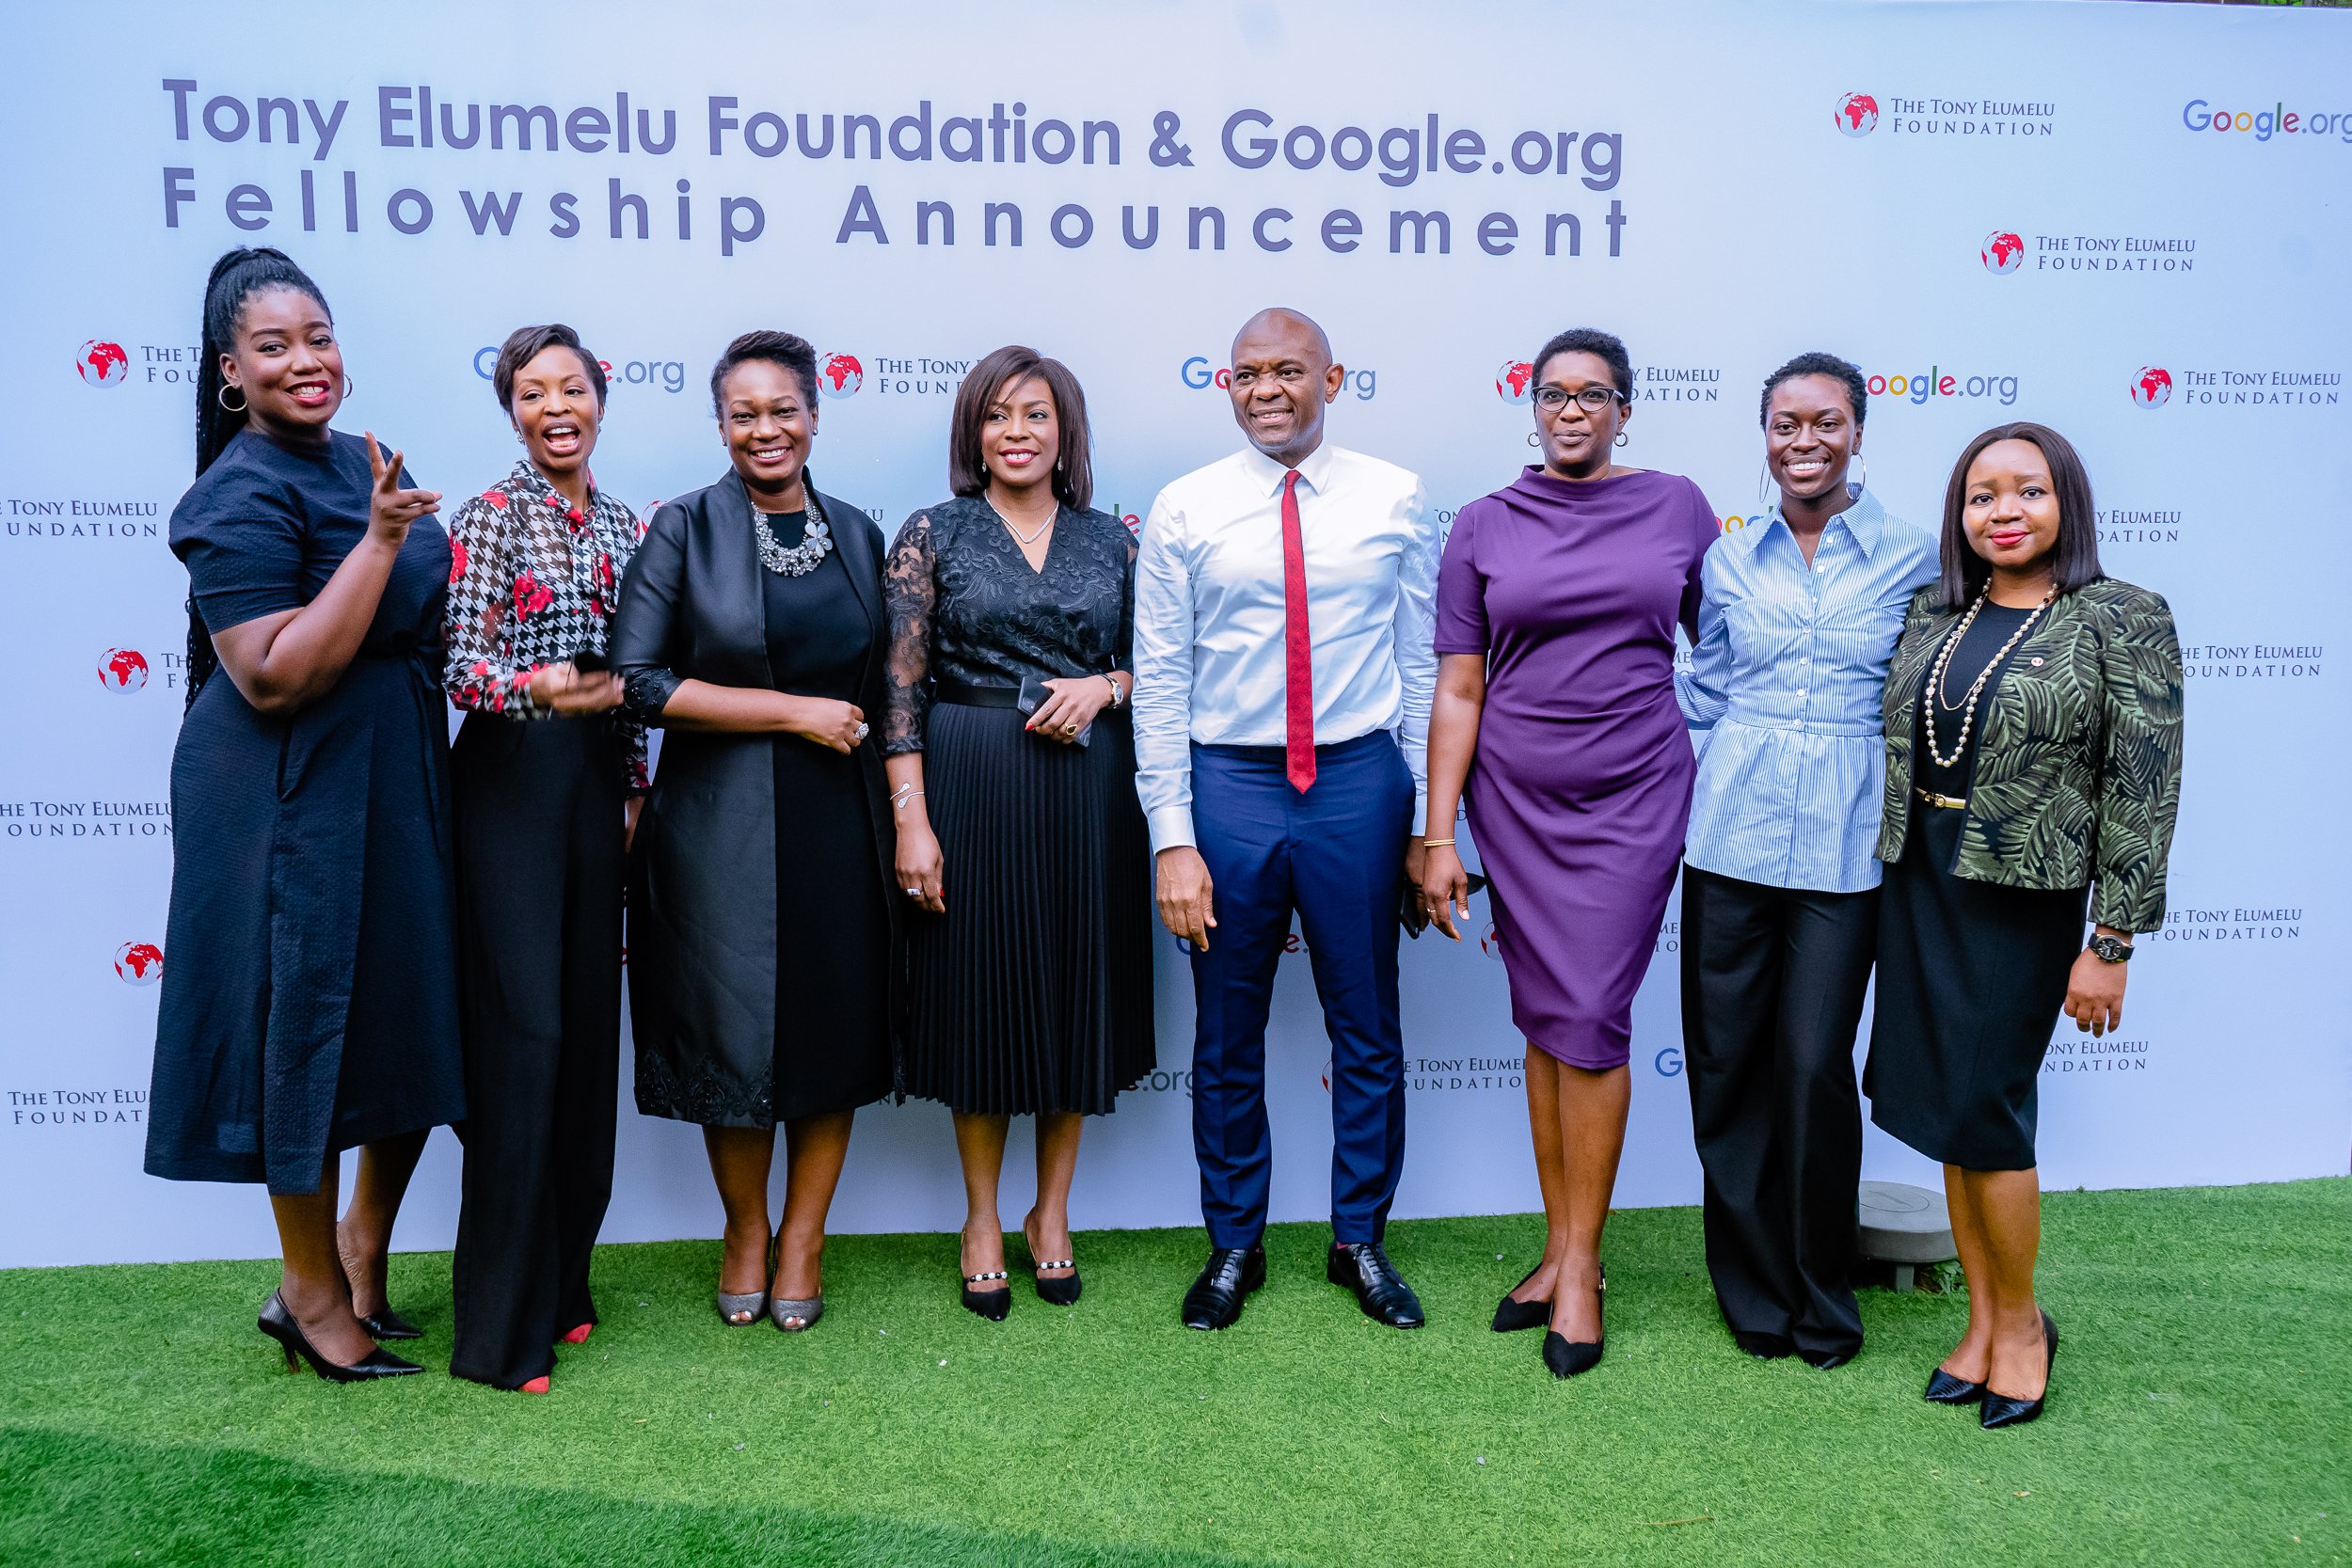 Tony Elumelu Foundation + Google Fellowship Announcement